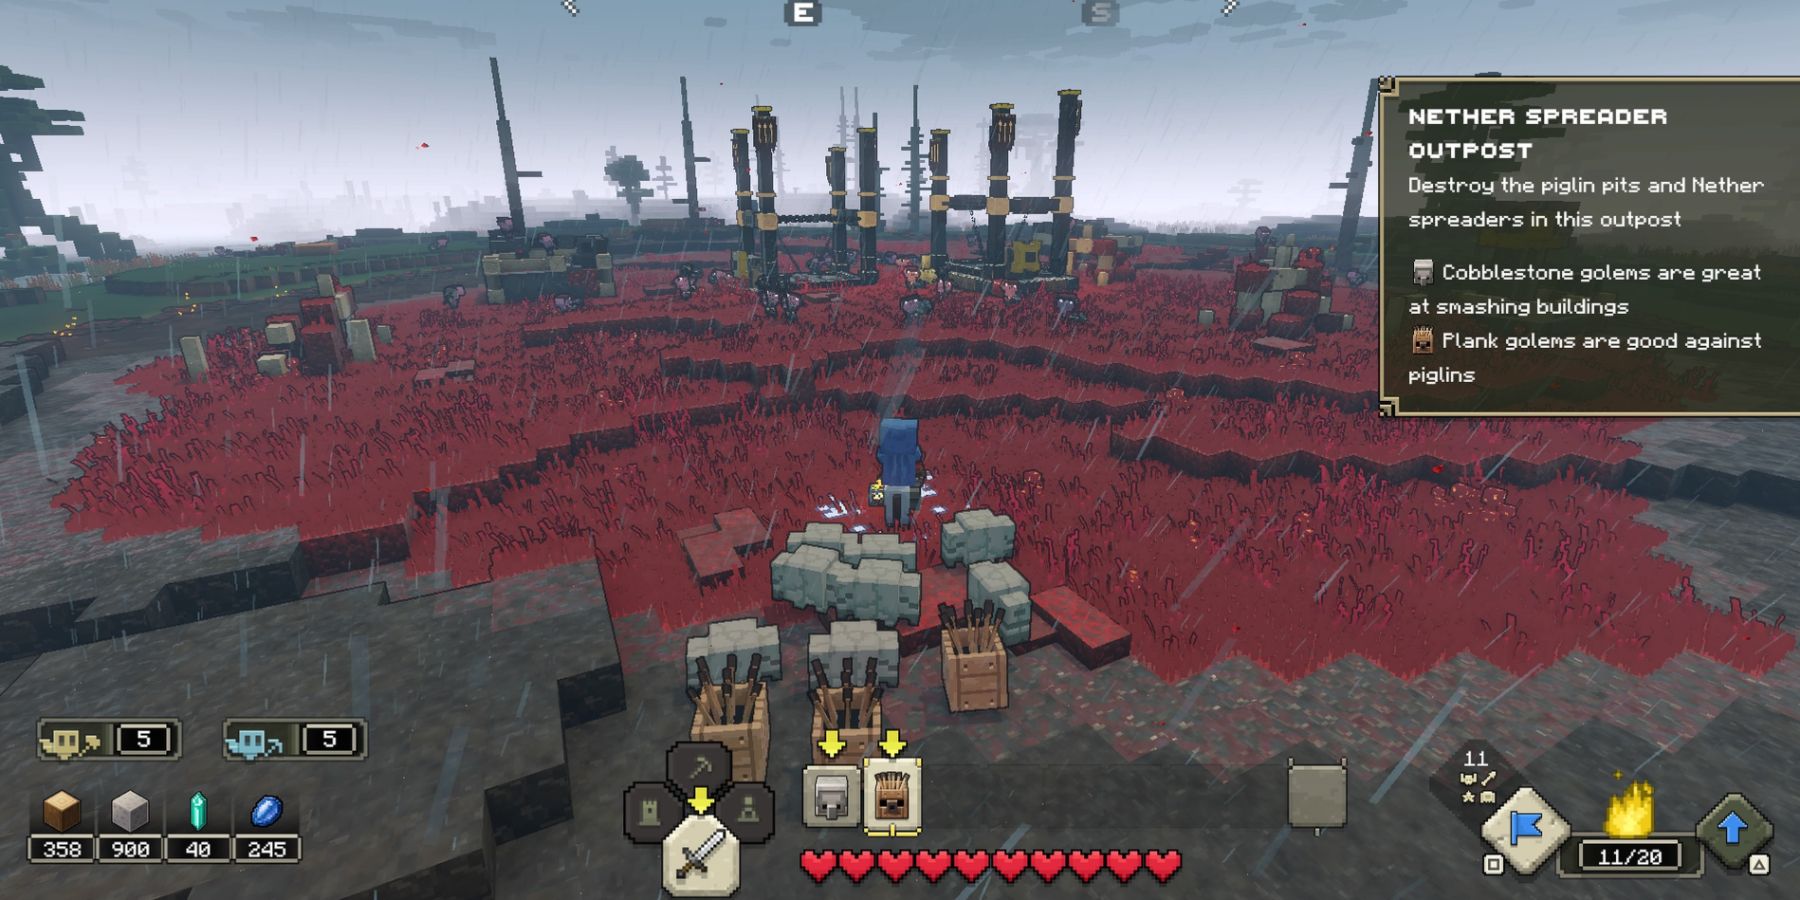 The Nether Spreader Outpost in Minecraft Legends